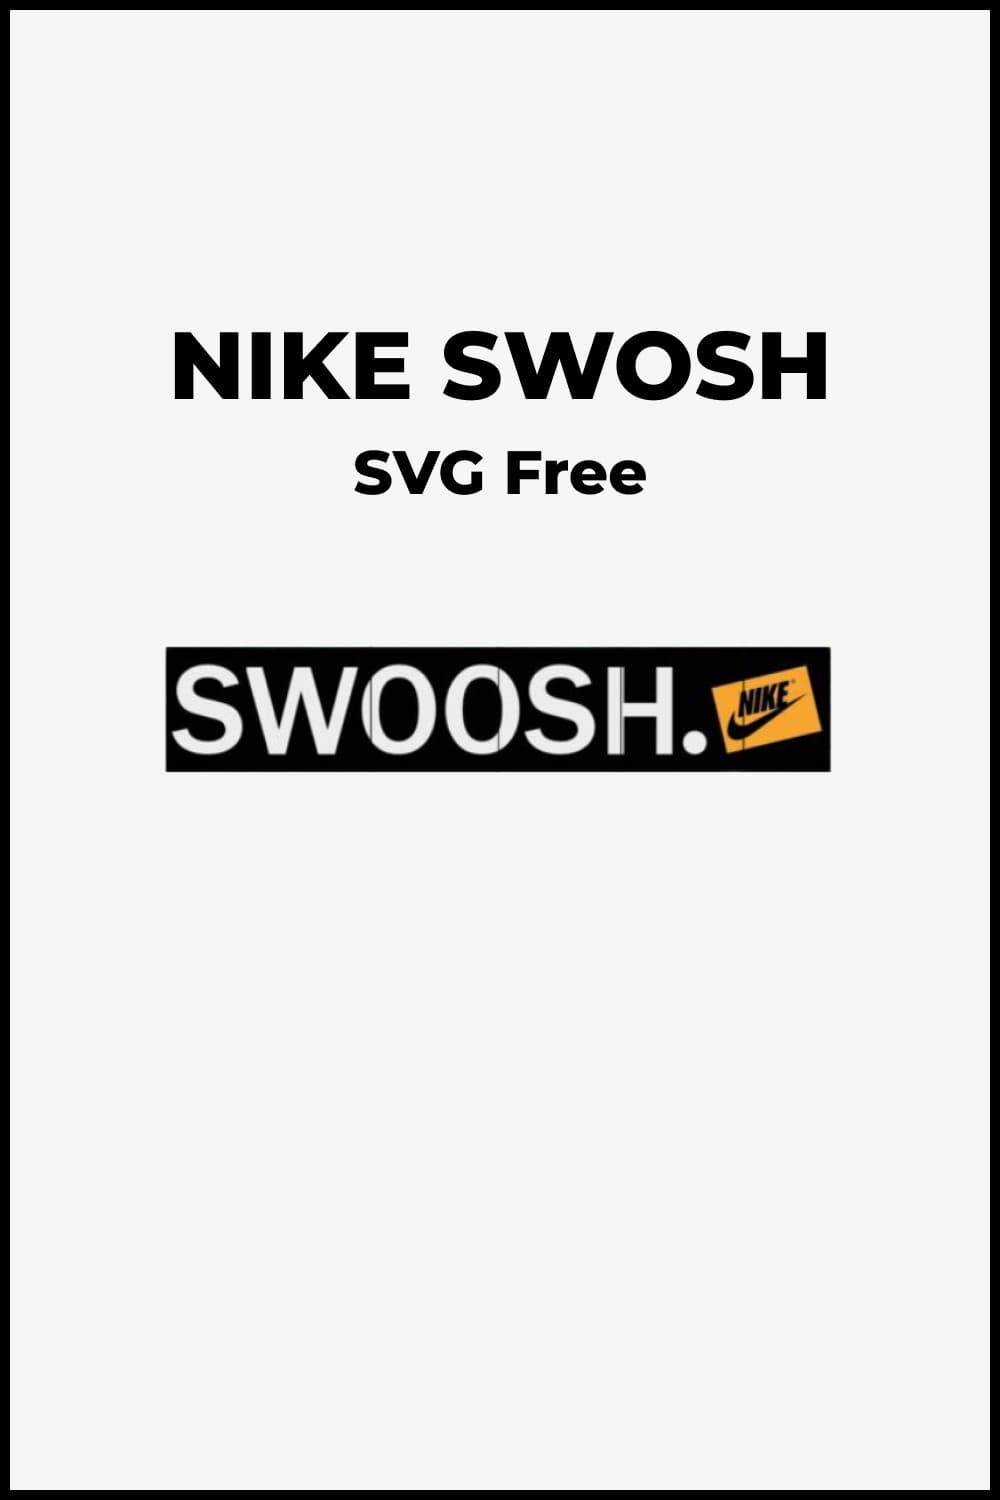 Nike Swoosh logo image in black.